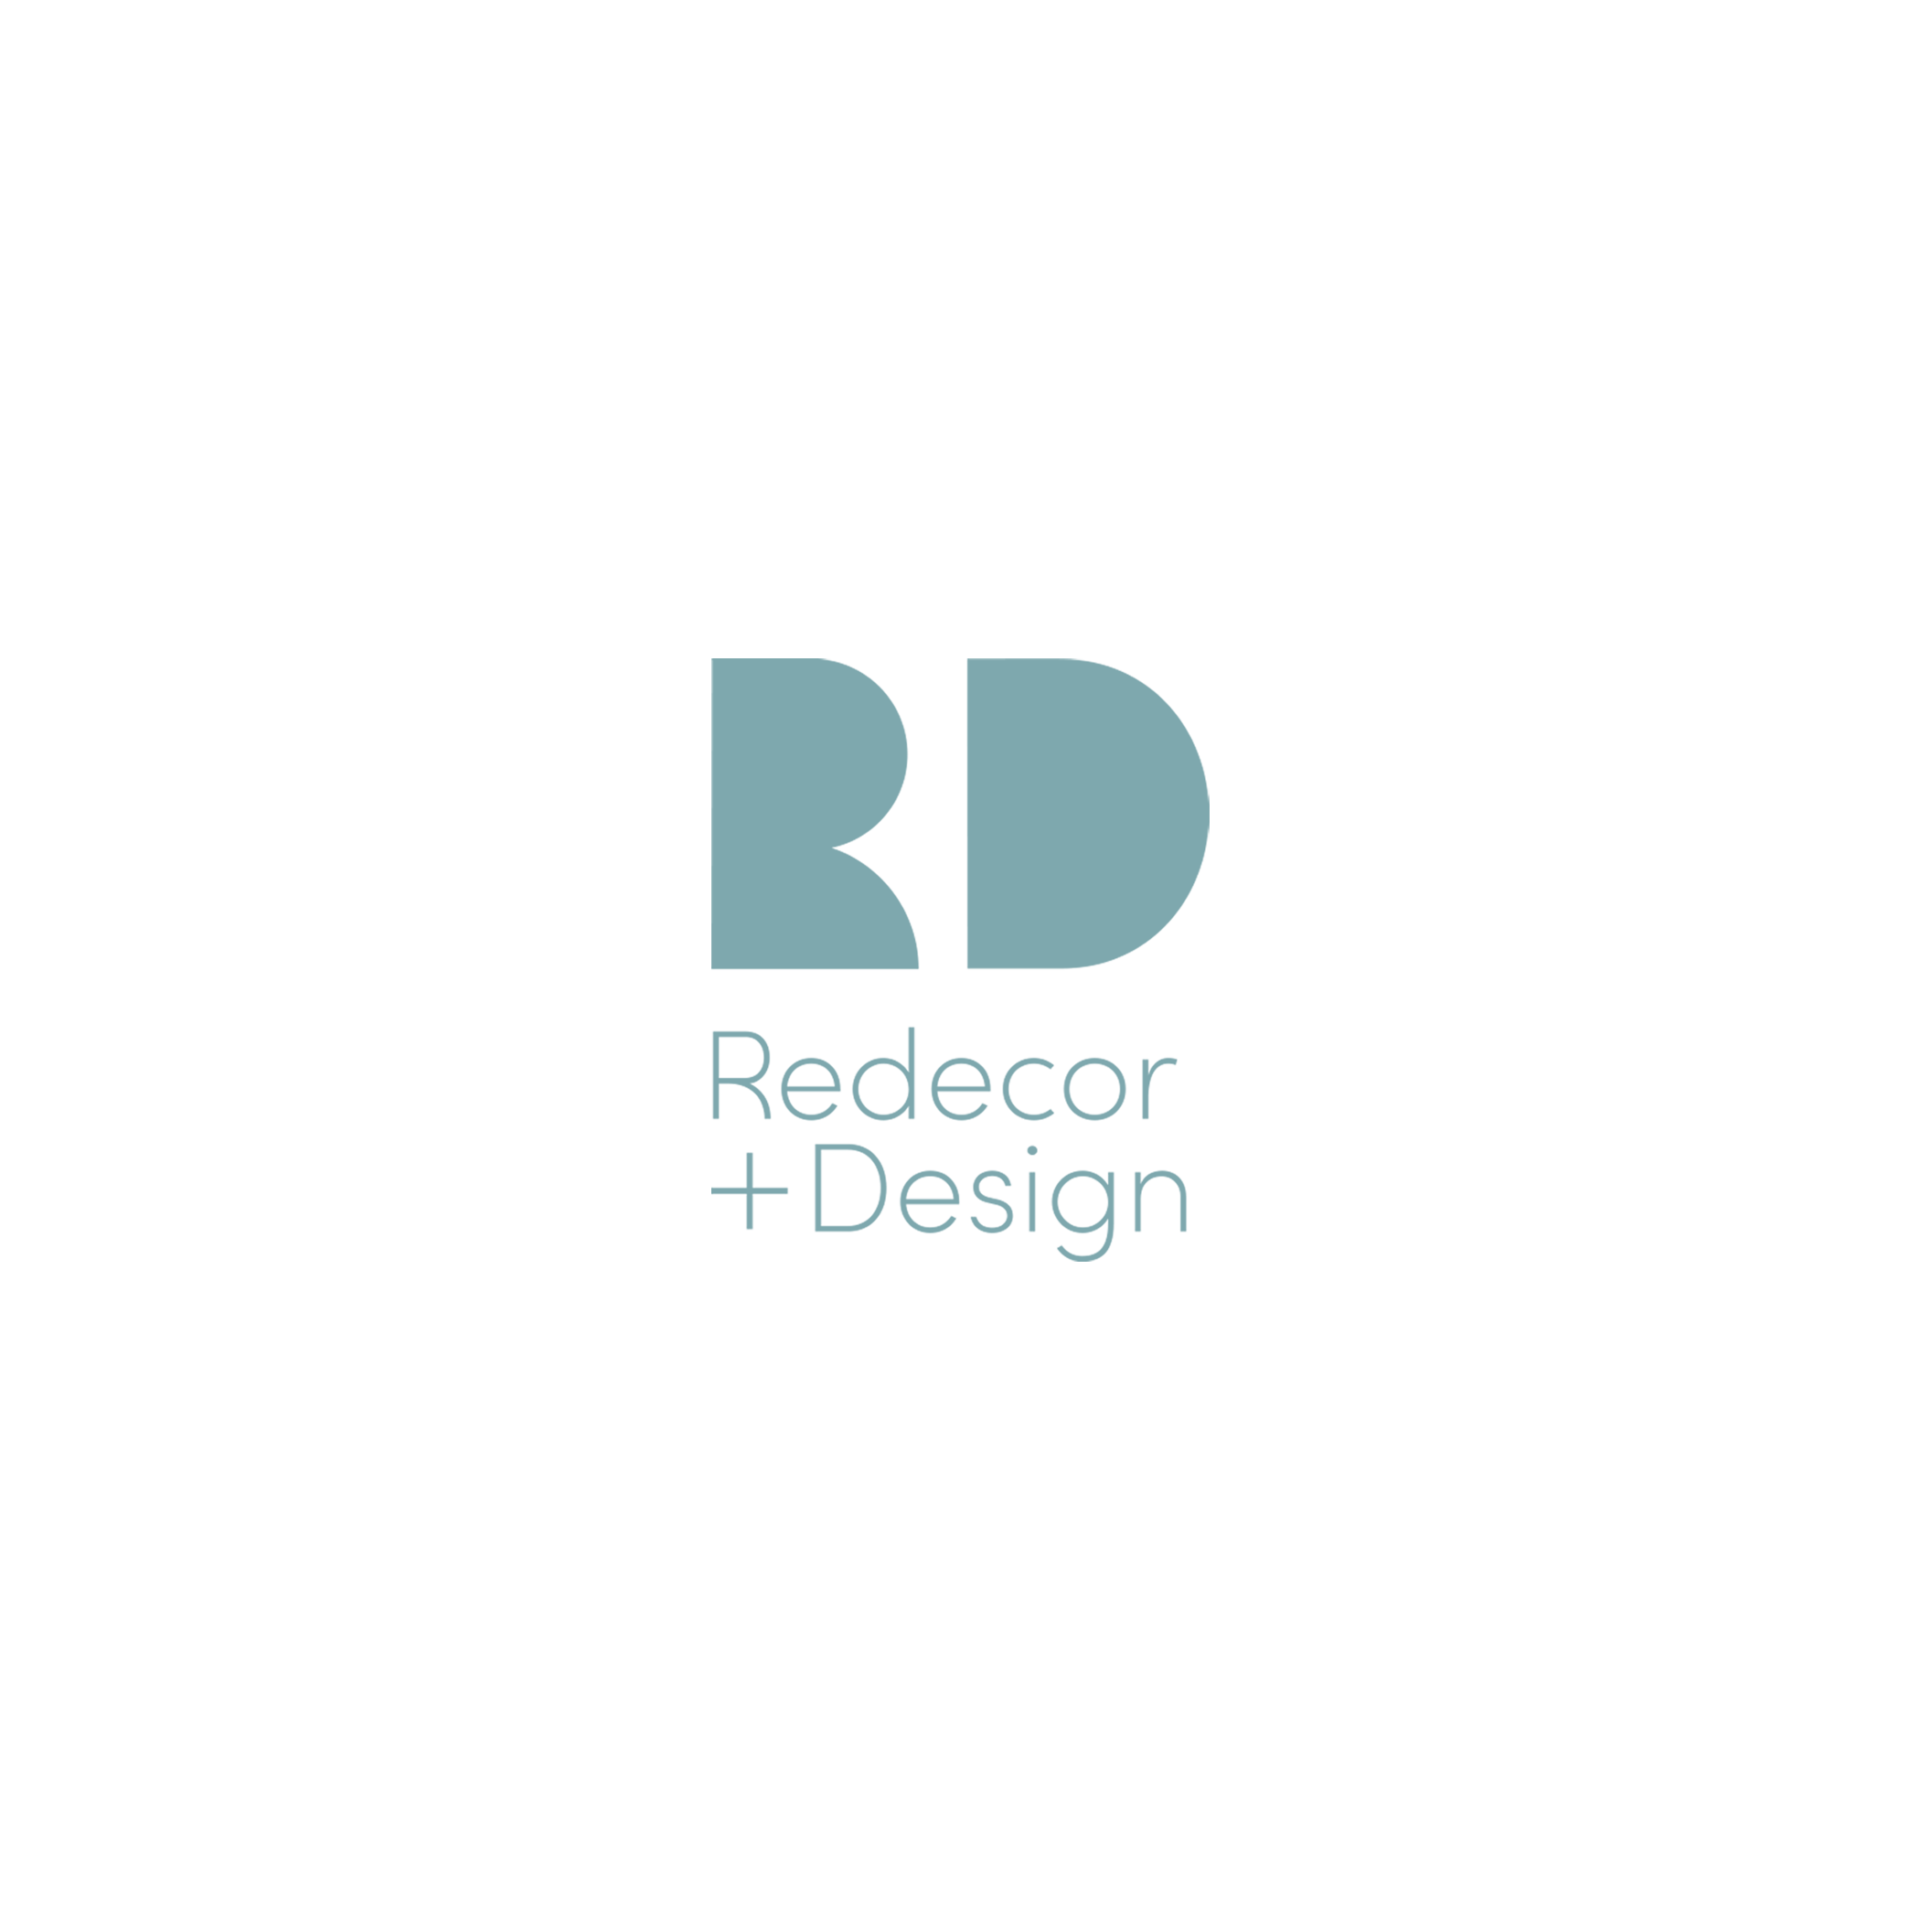 Redecor and Design Logo Teal